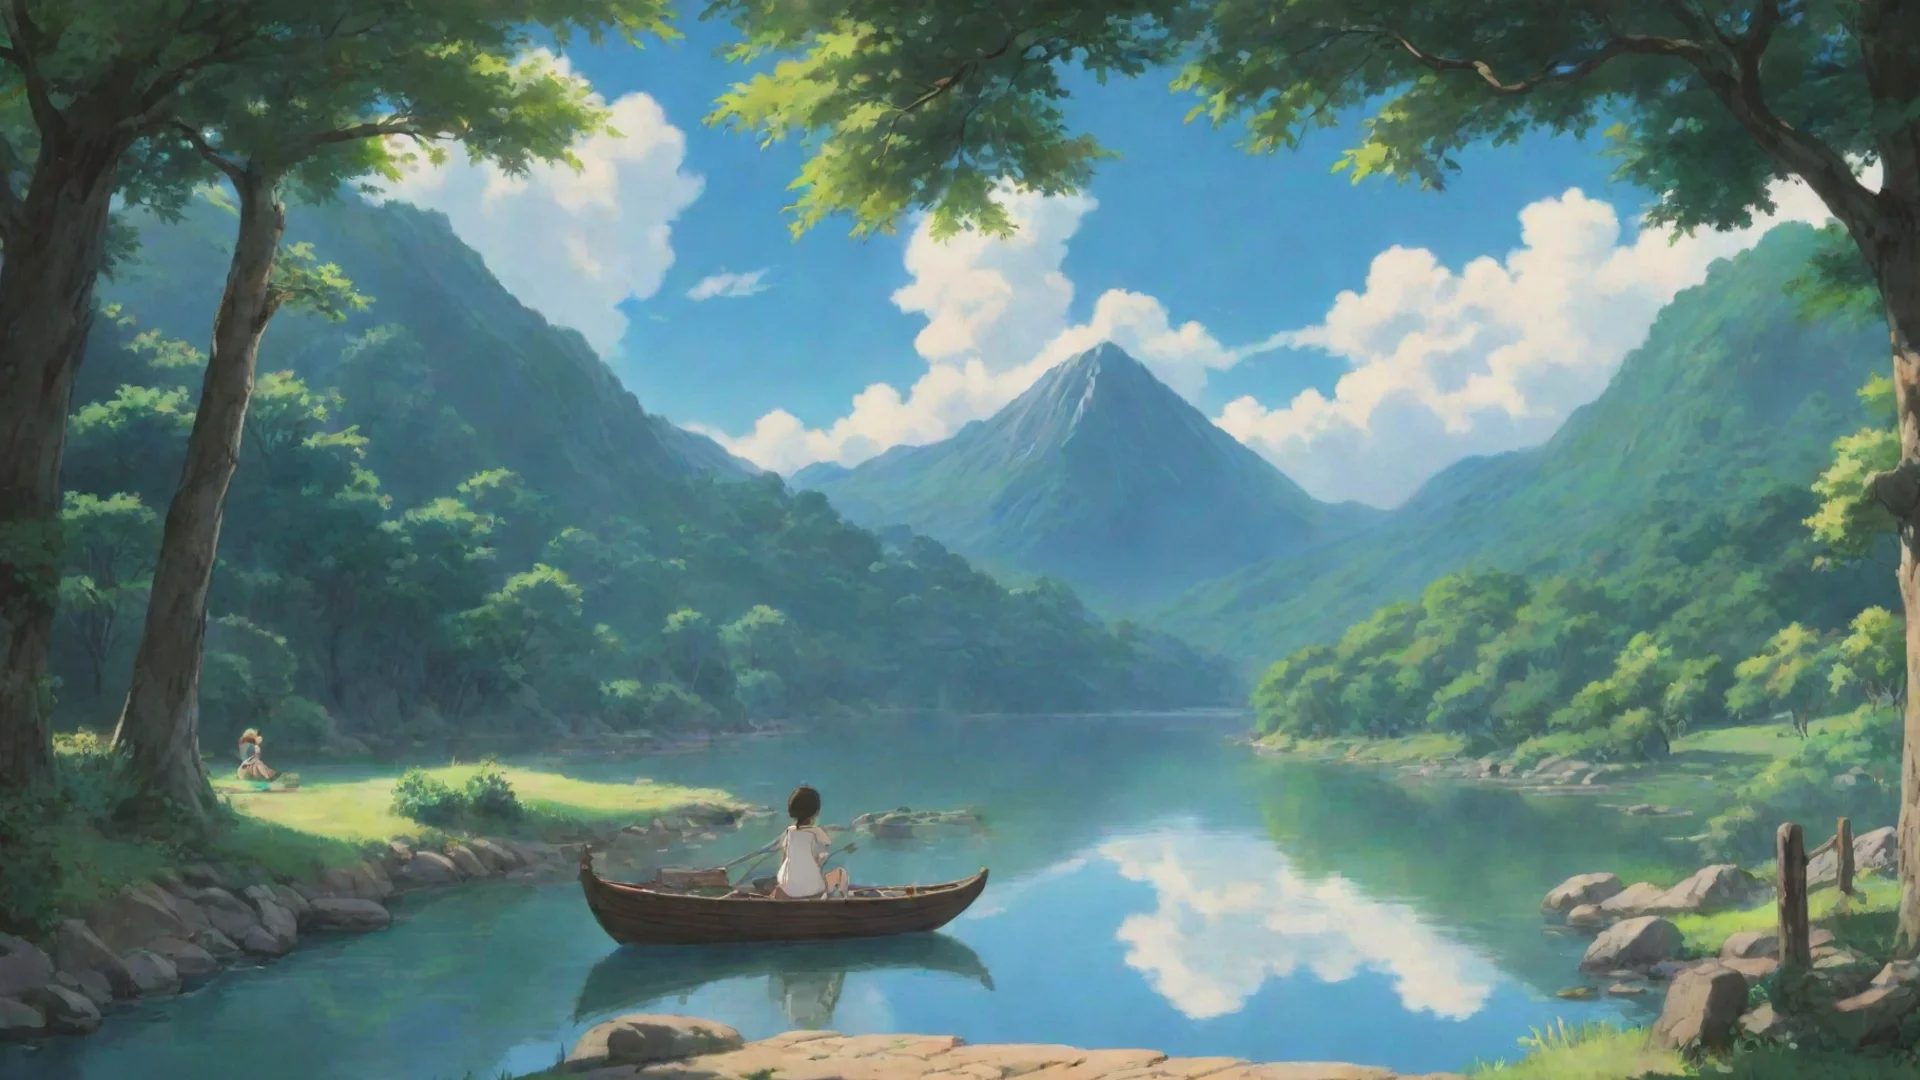 trending peaceful serene anime ghibli scene relax good looking fantastic 1 wide